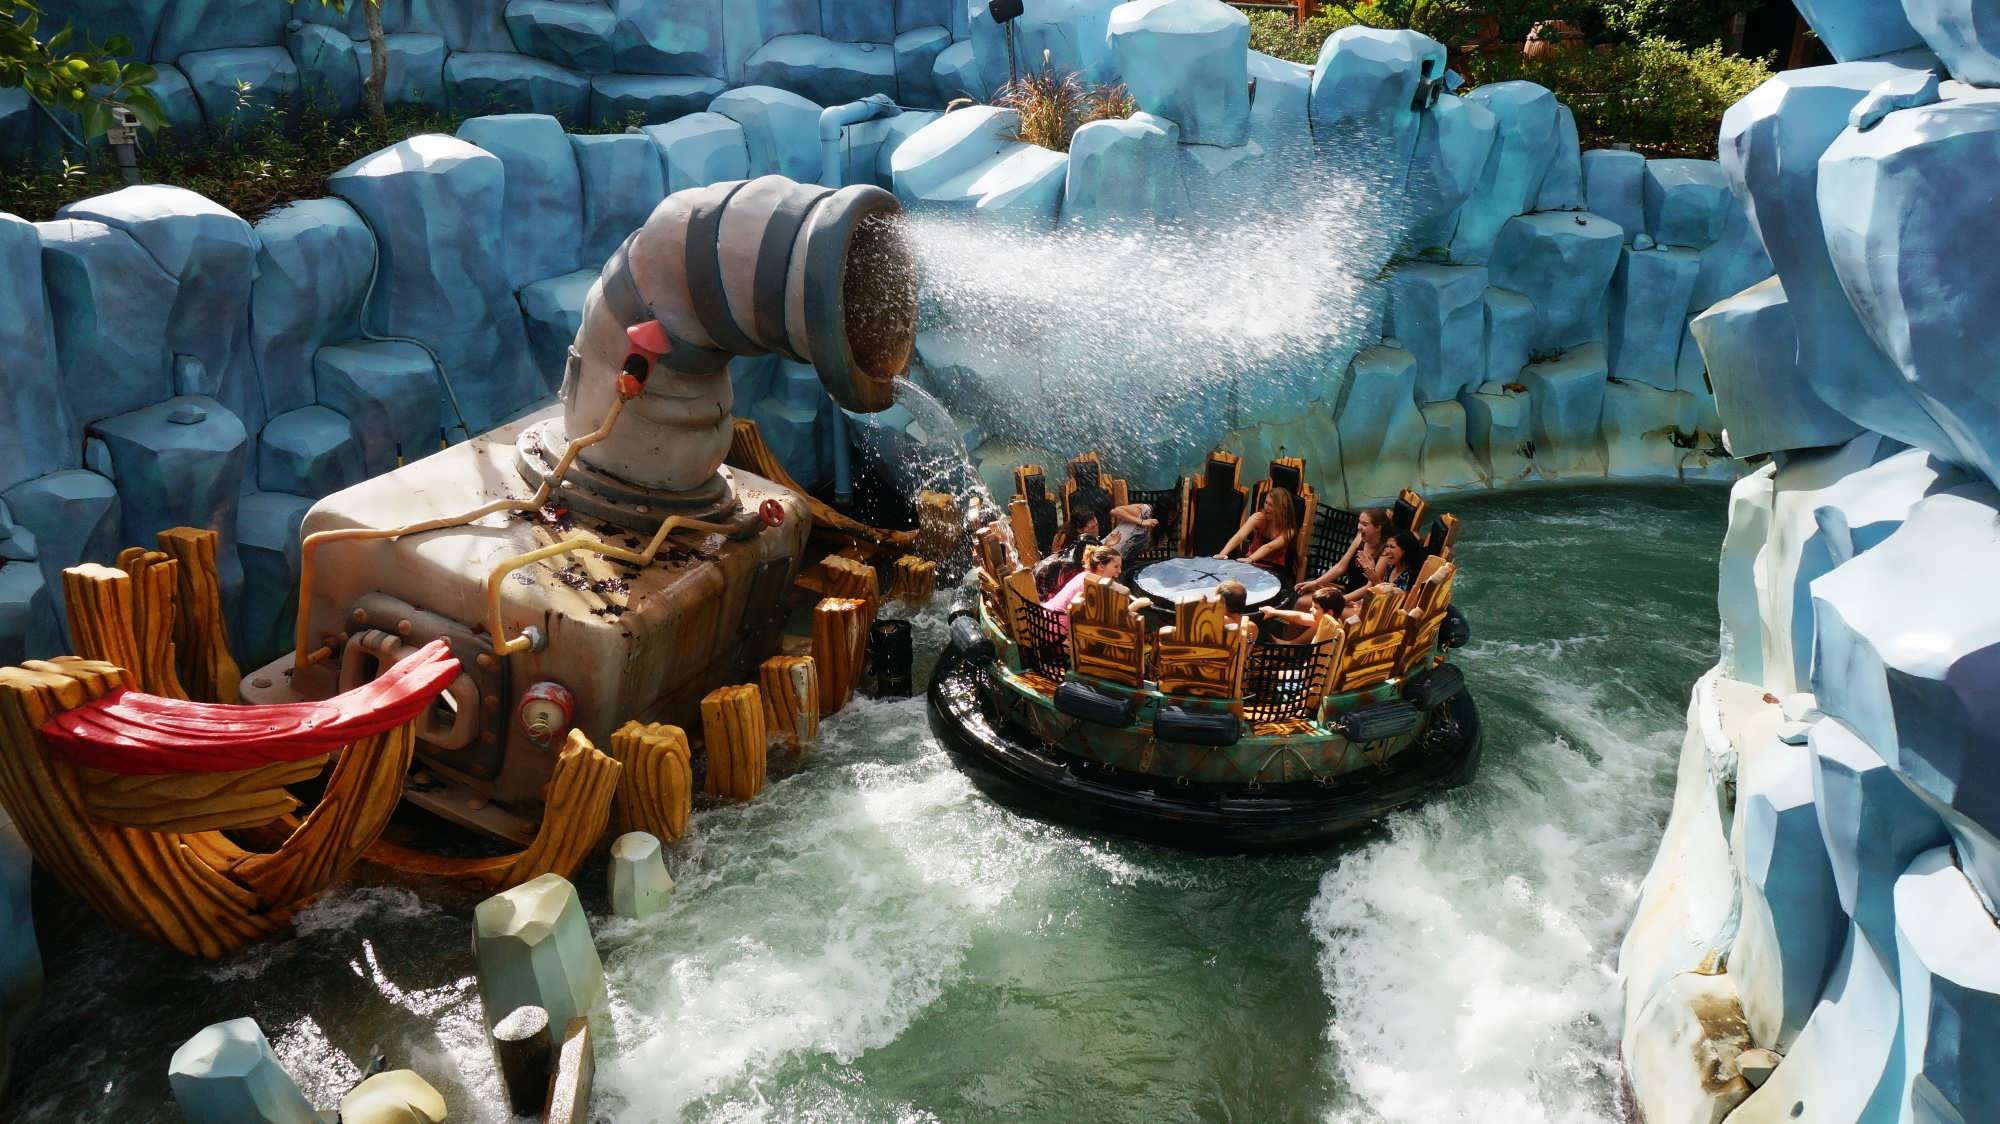 Islands of Adventure Review, Universal Studios Orlando Theme Park